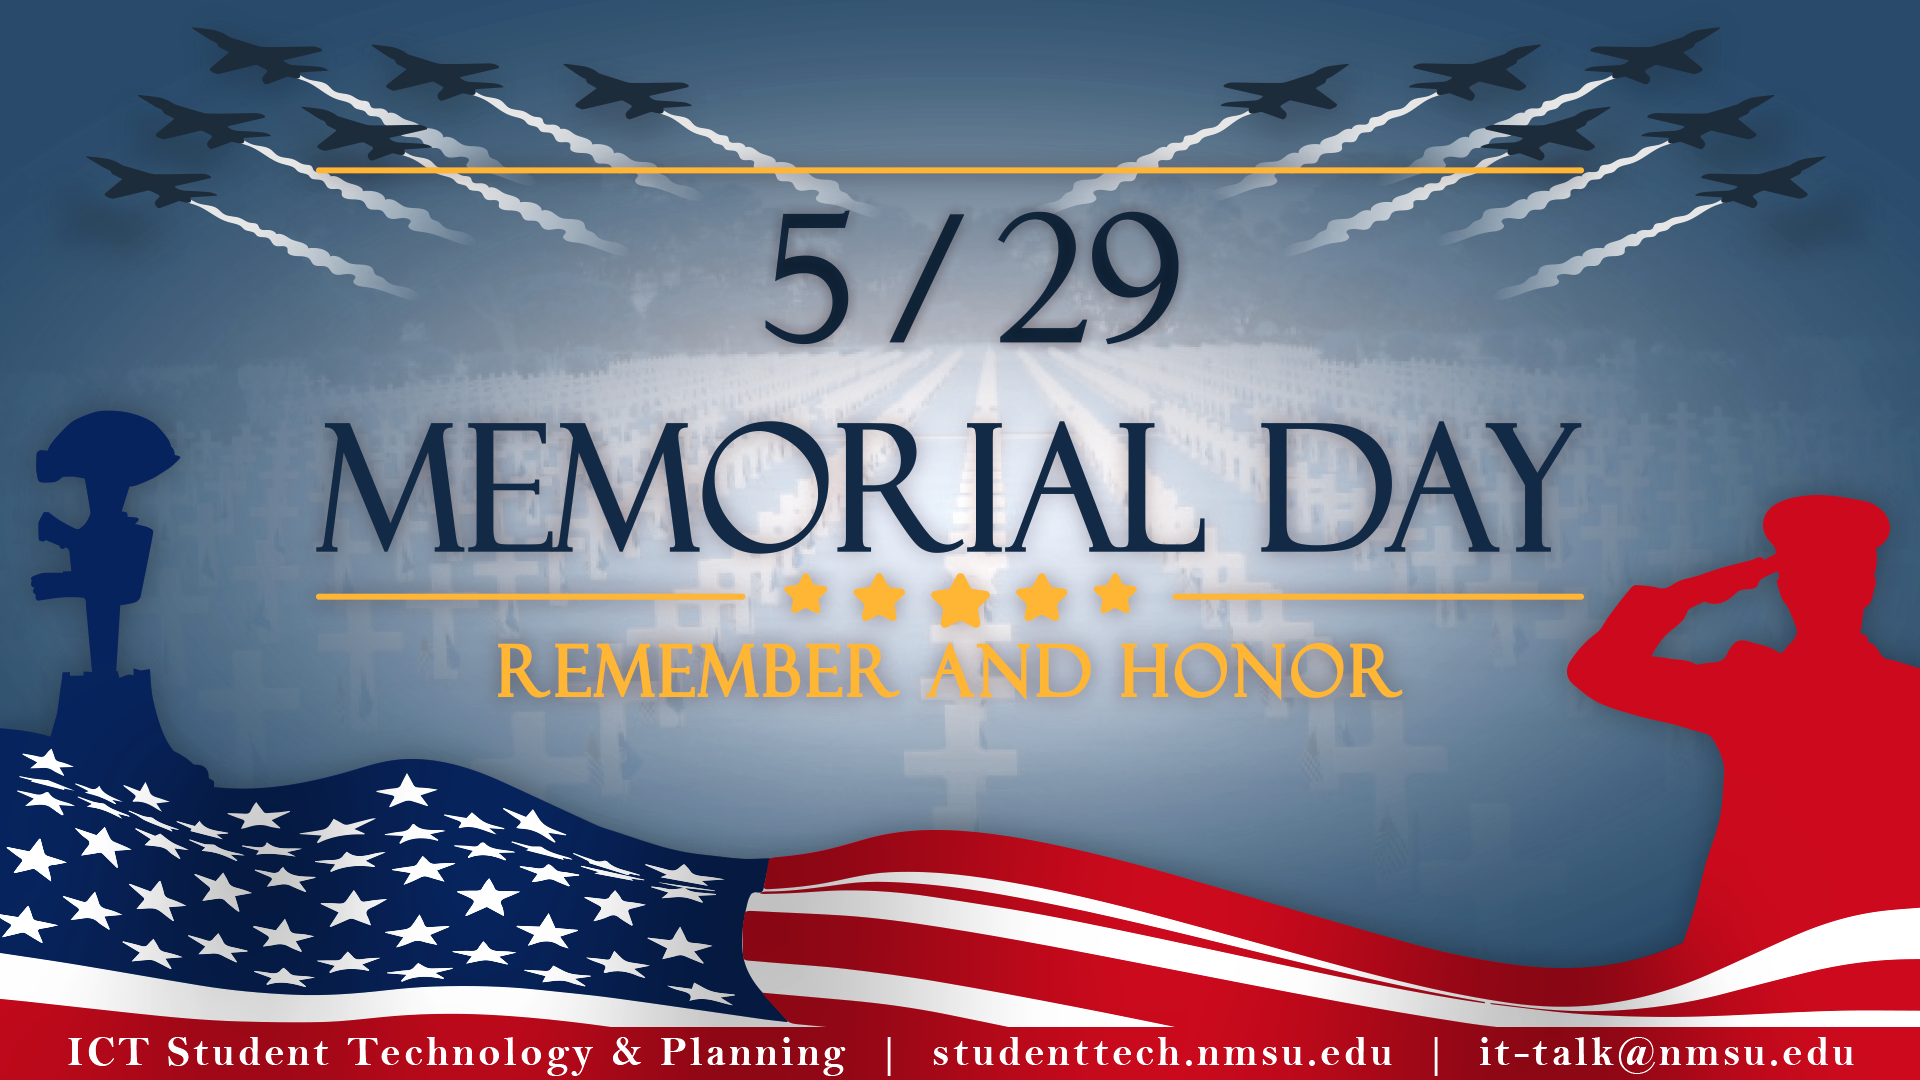 5/29 - Memorial Day, remember and honor.